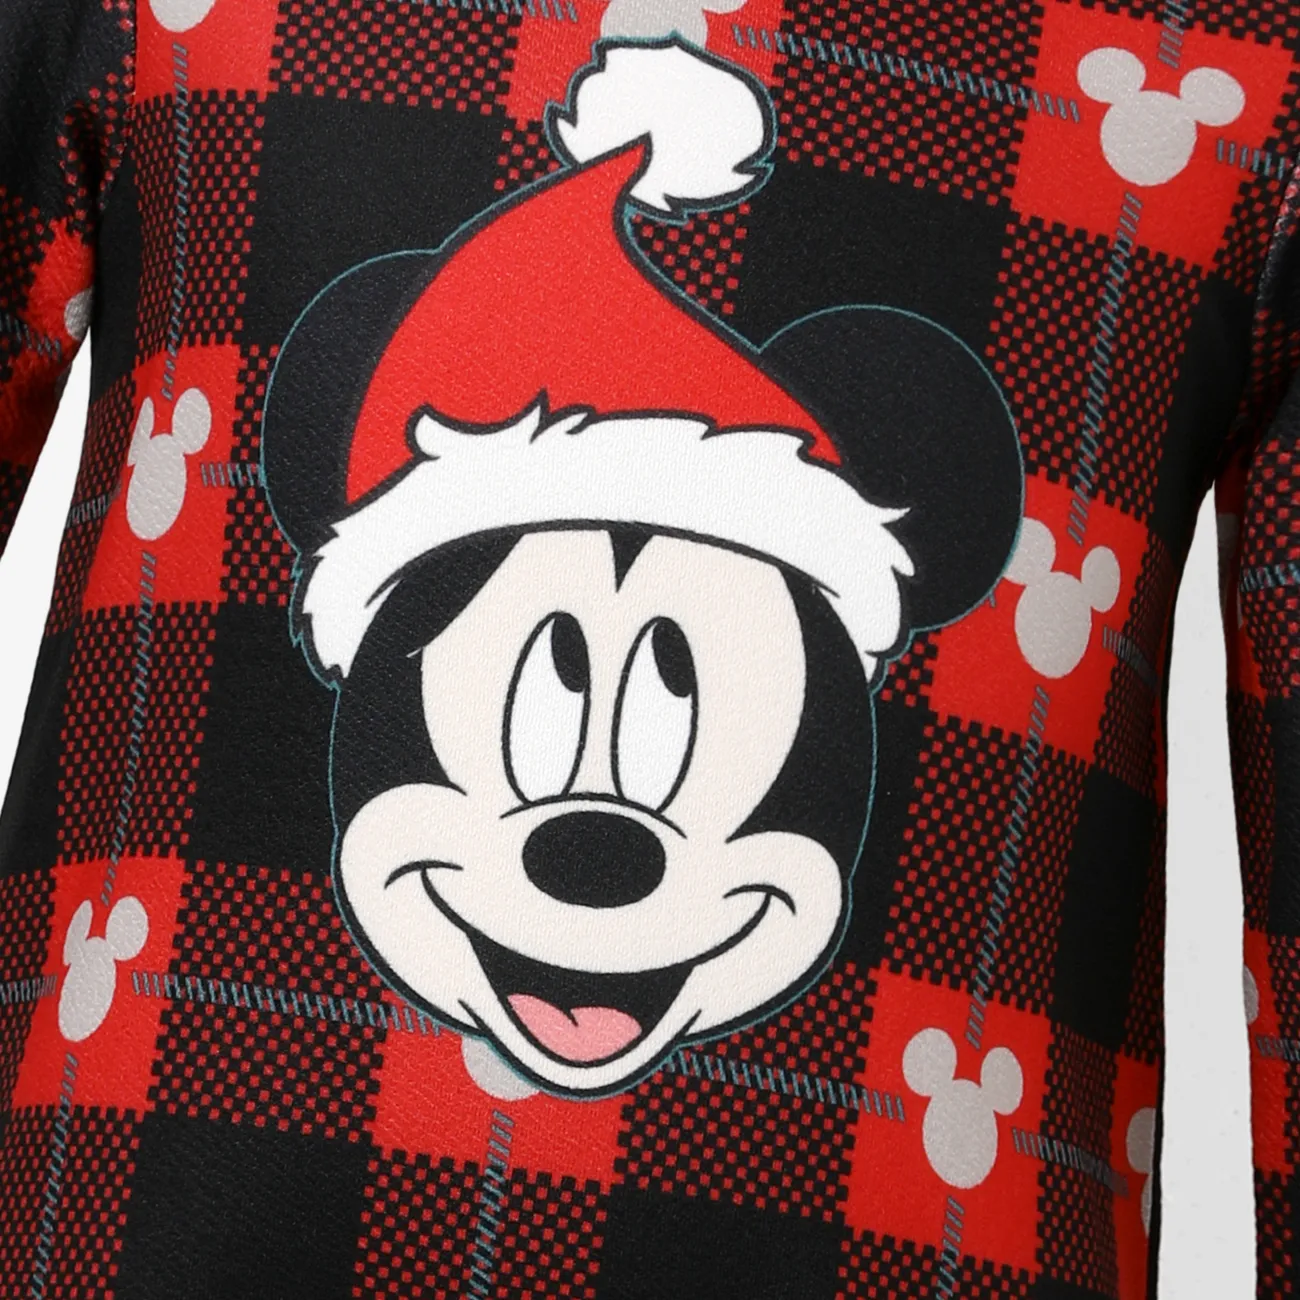 Disney Mickey and Friends Look de família Manga comprida Conjuntos de roupa para a família Conjuntos Preto big image 1